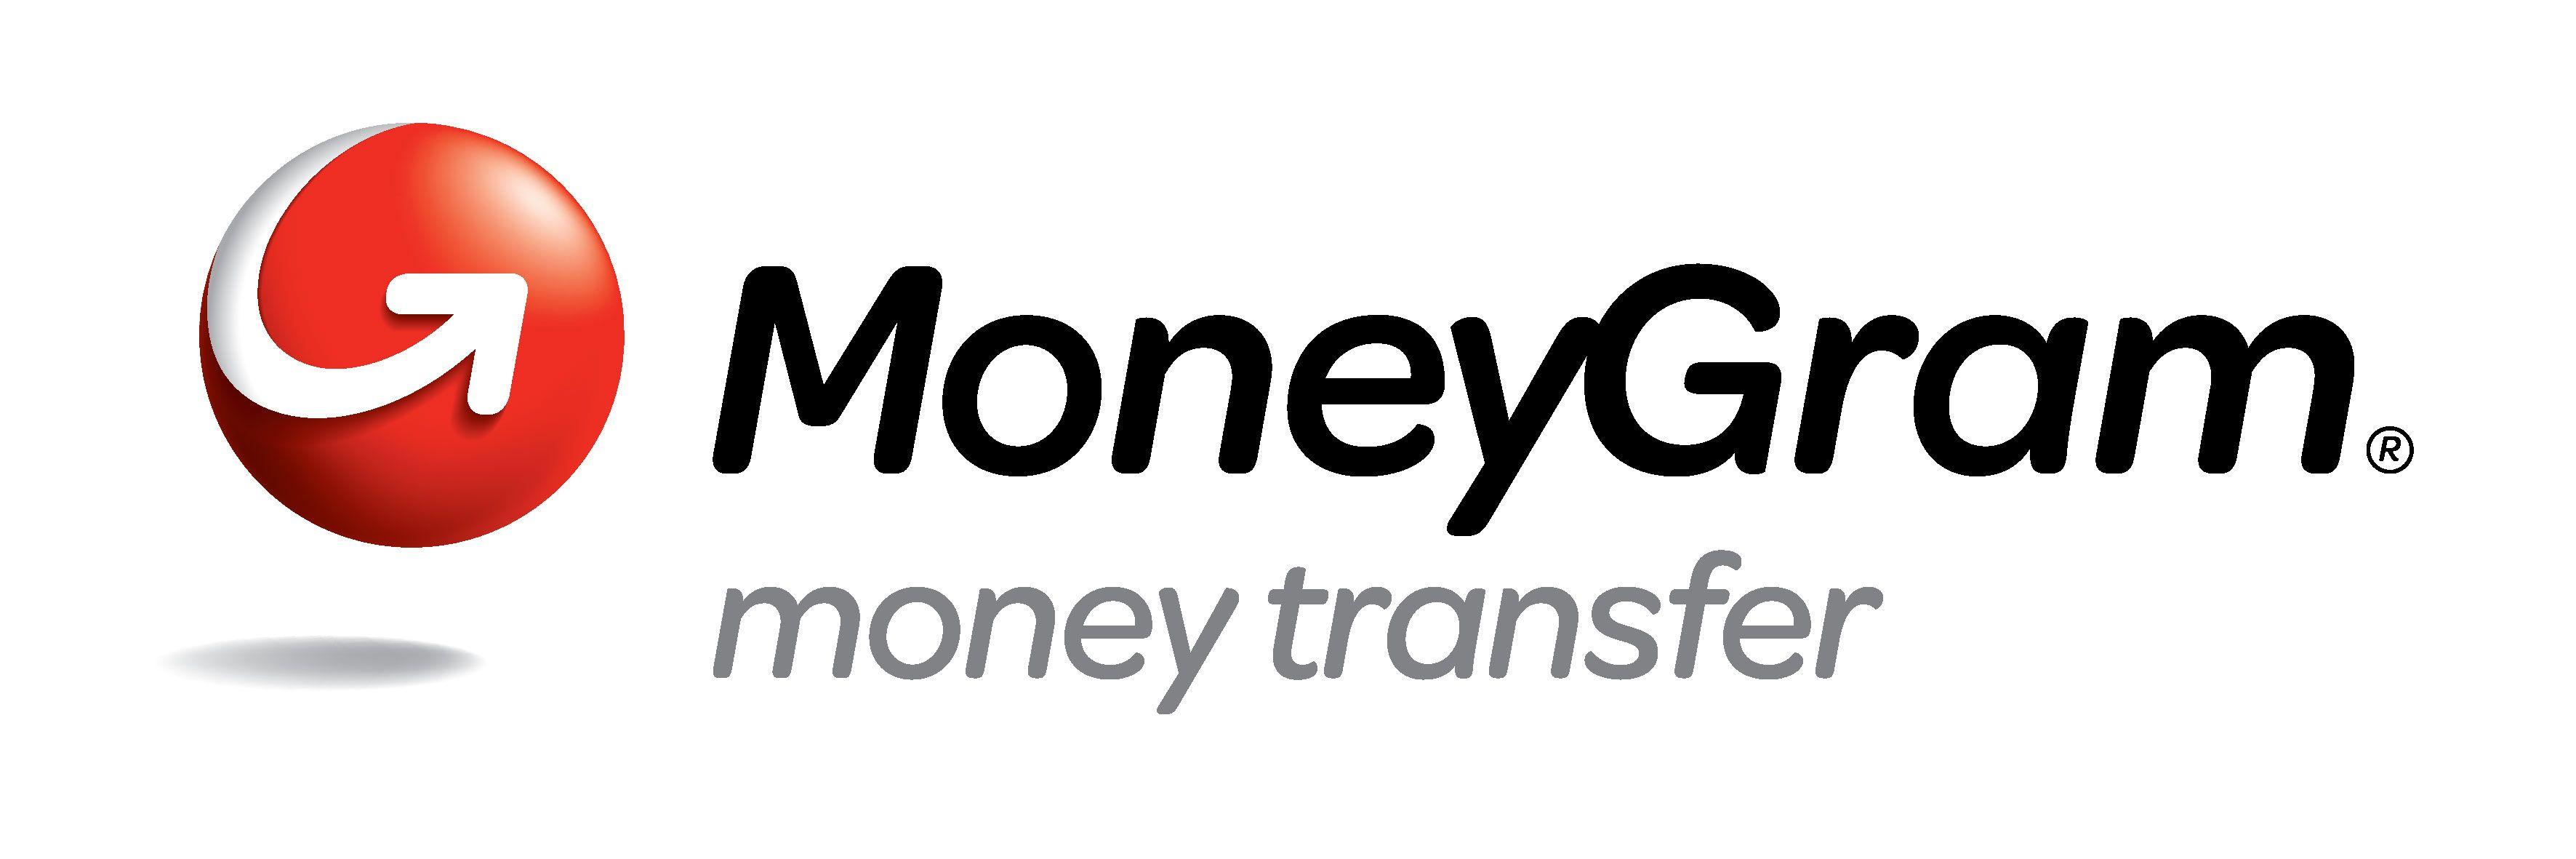 MoneyGram Logo - MoneyGram Money Transfer Service in Kenya, Send and Receive Money ...